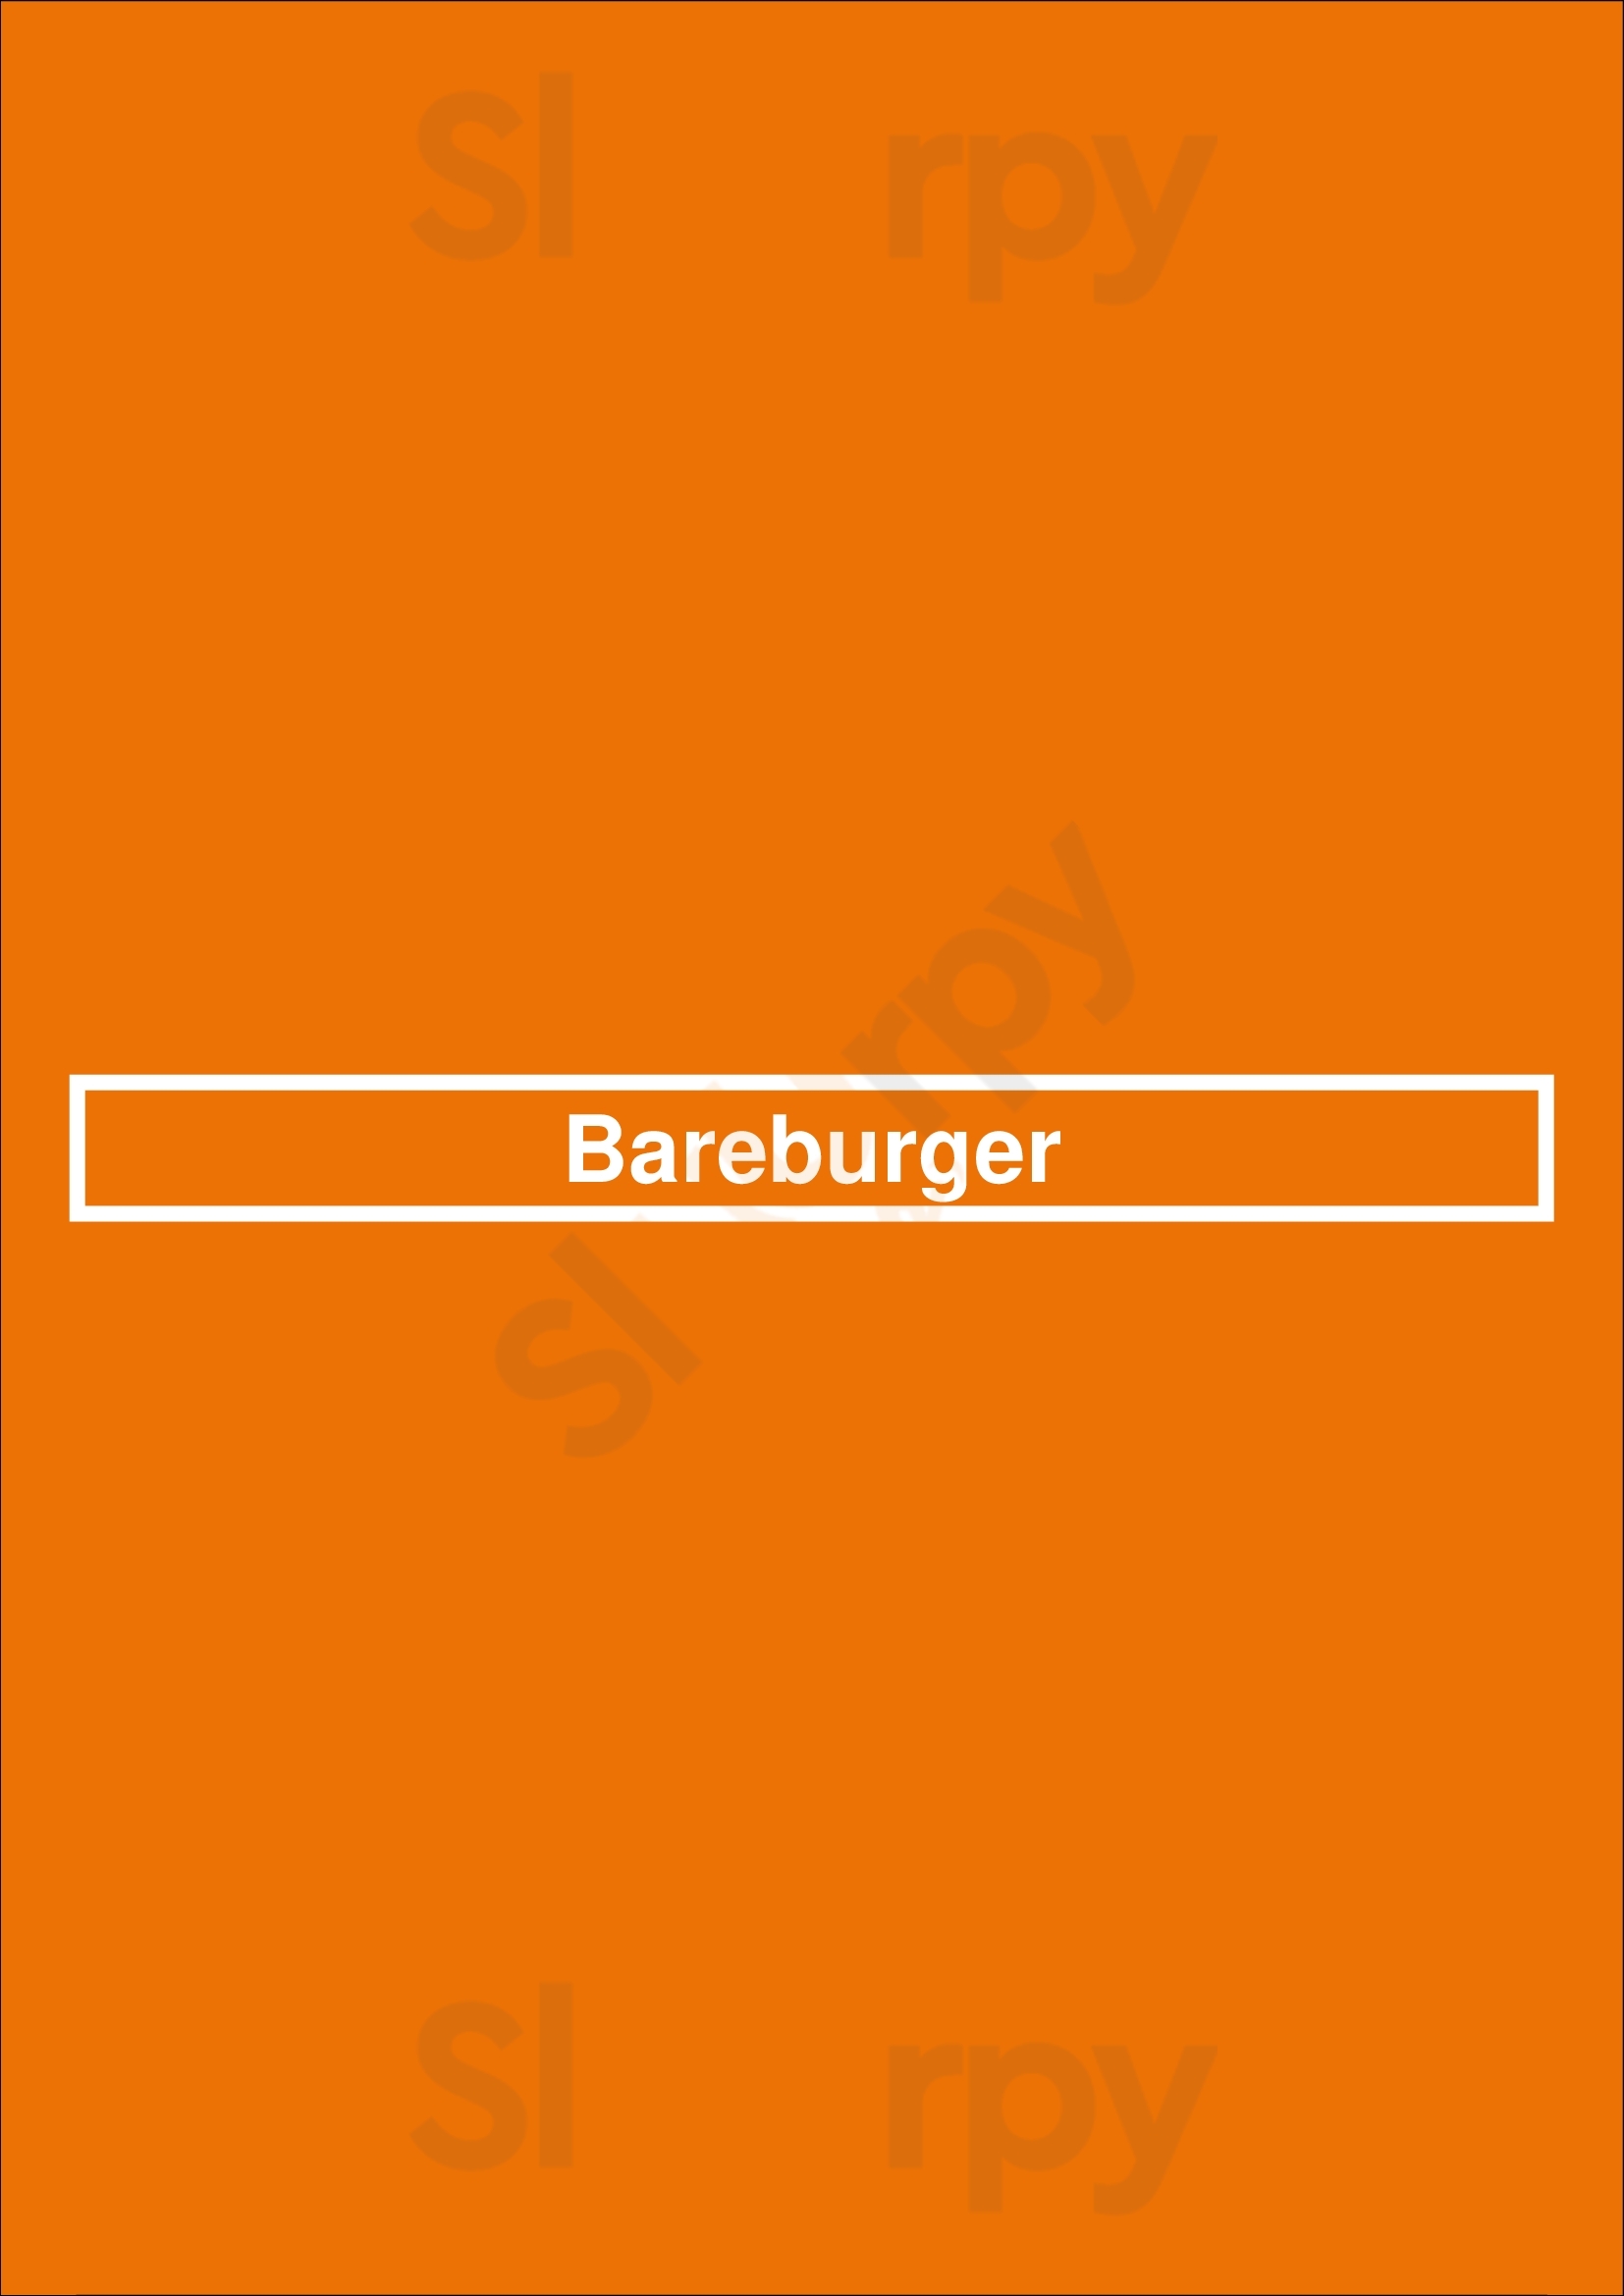 Bareburger Atlanta Menu - 1